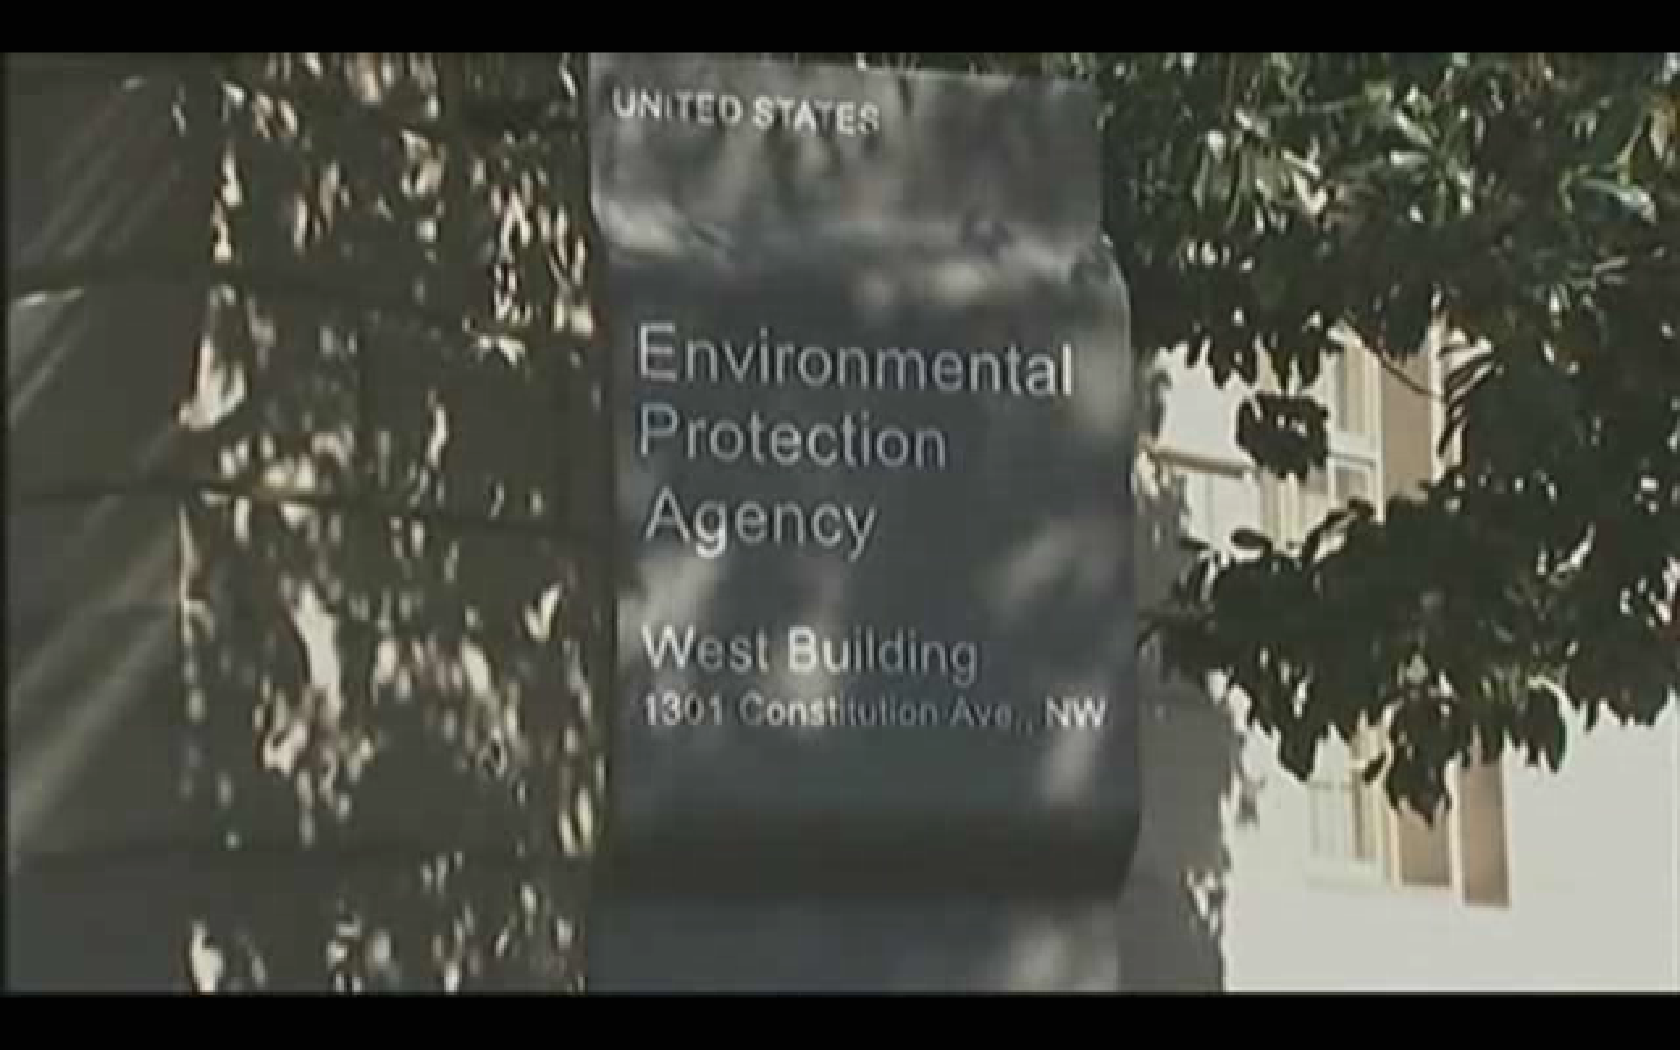 EPA sign